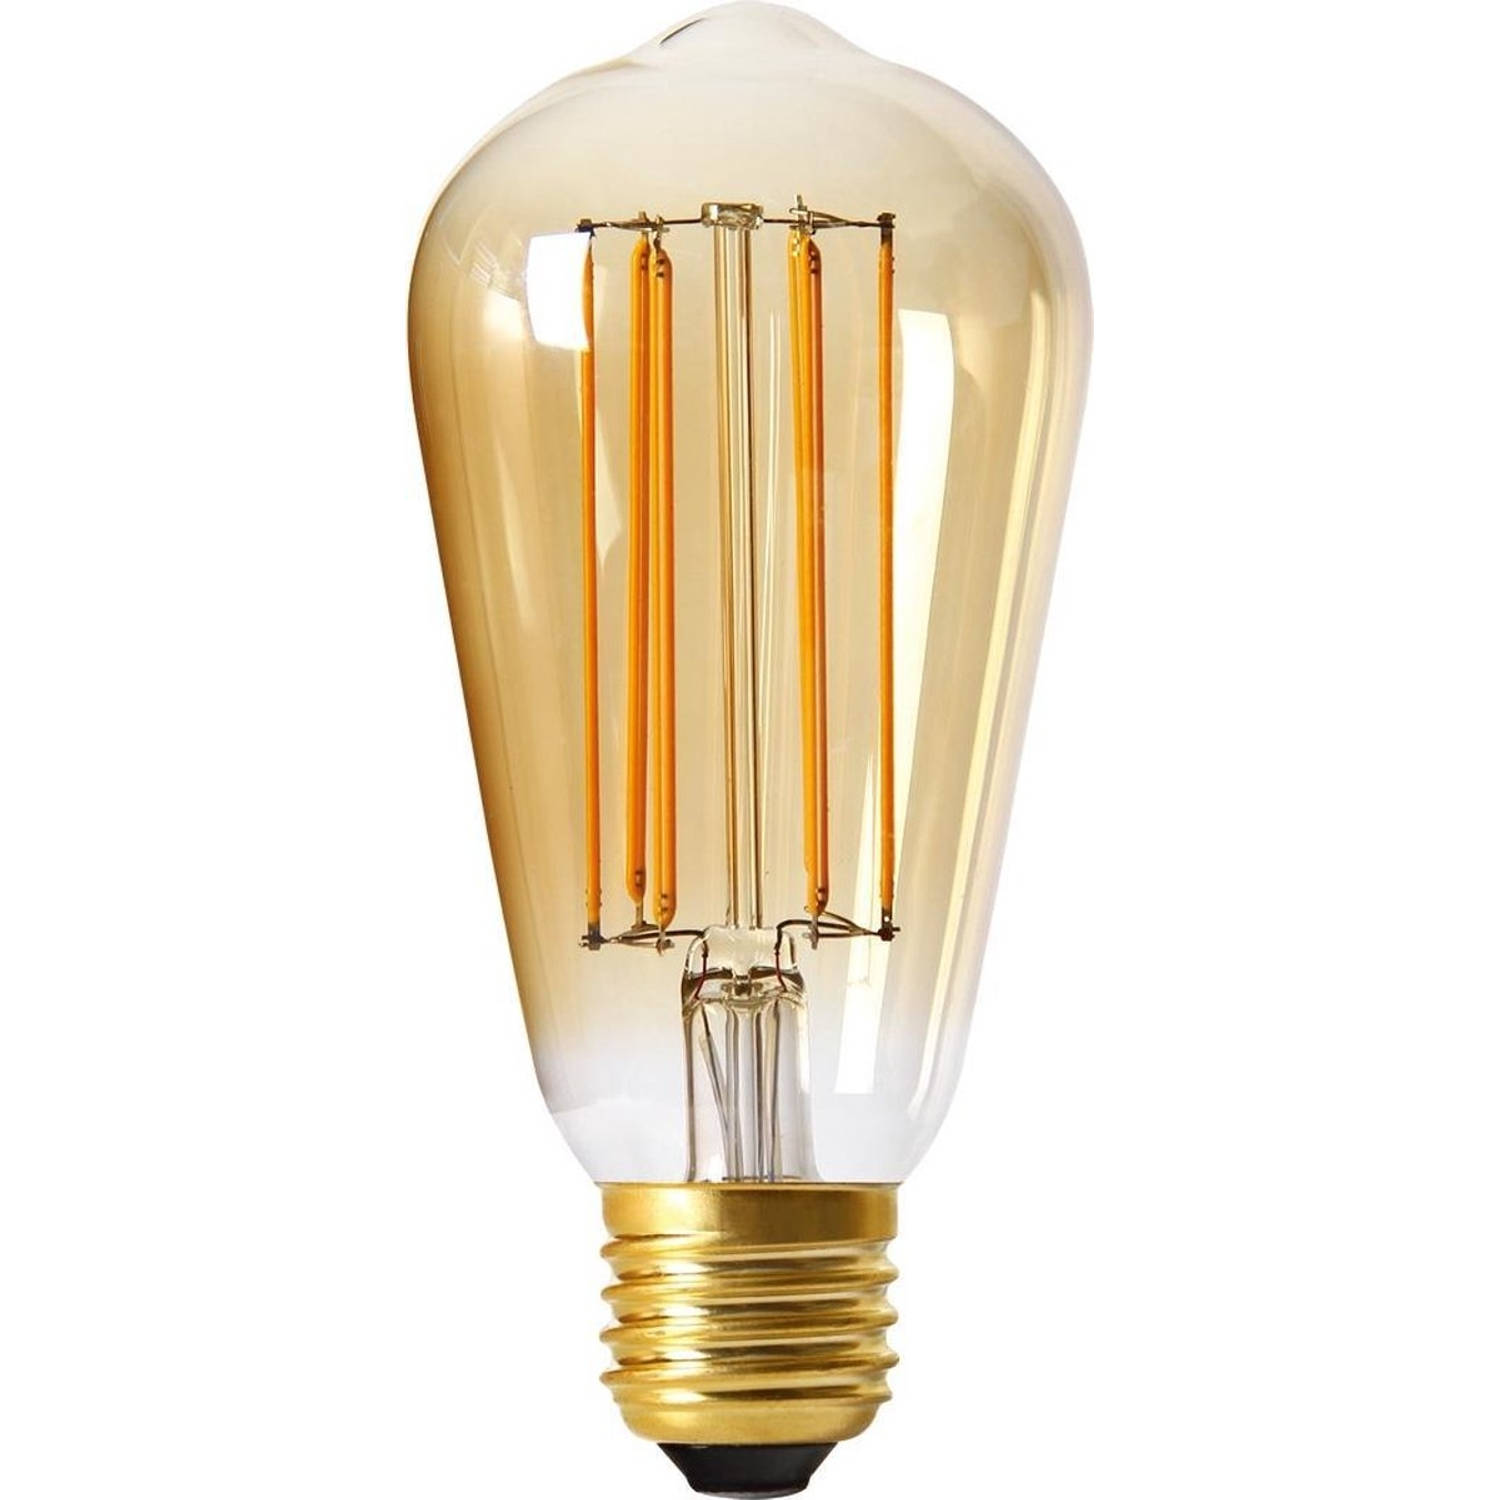 Moodzz - ST64 - Dimbare LED lamp - 11.29 per stuk - 2 pack